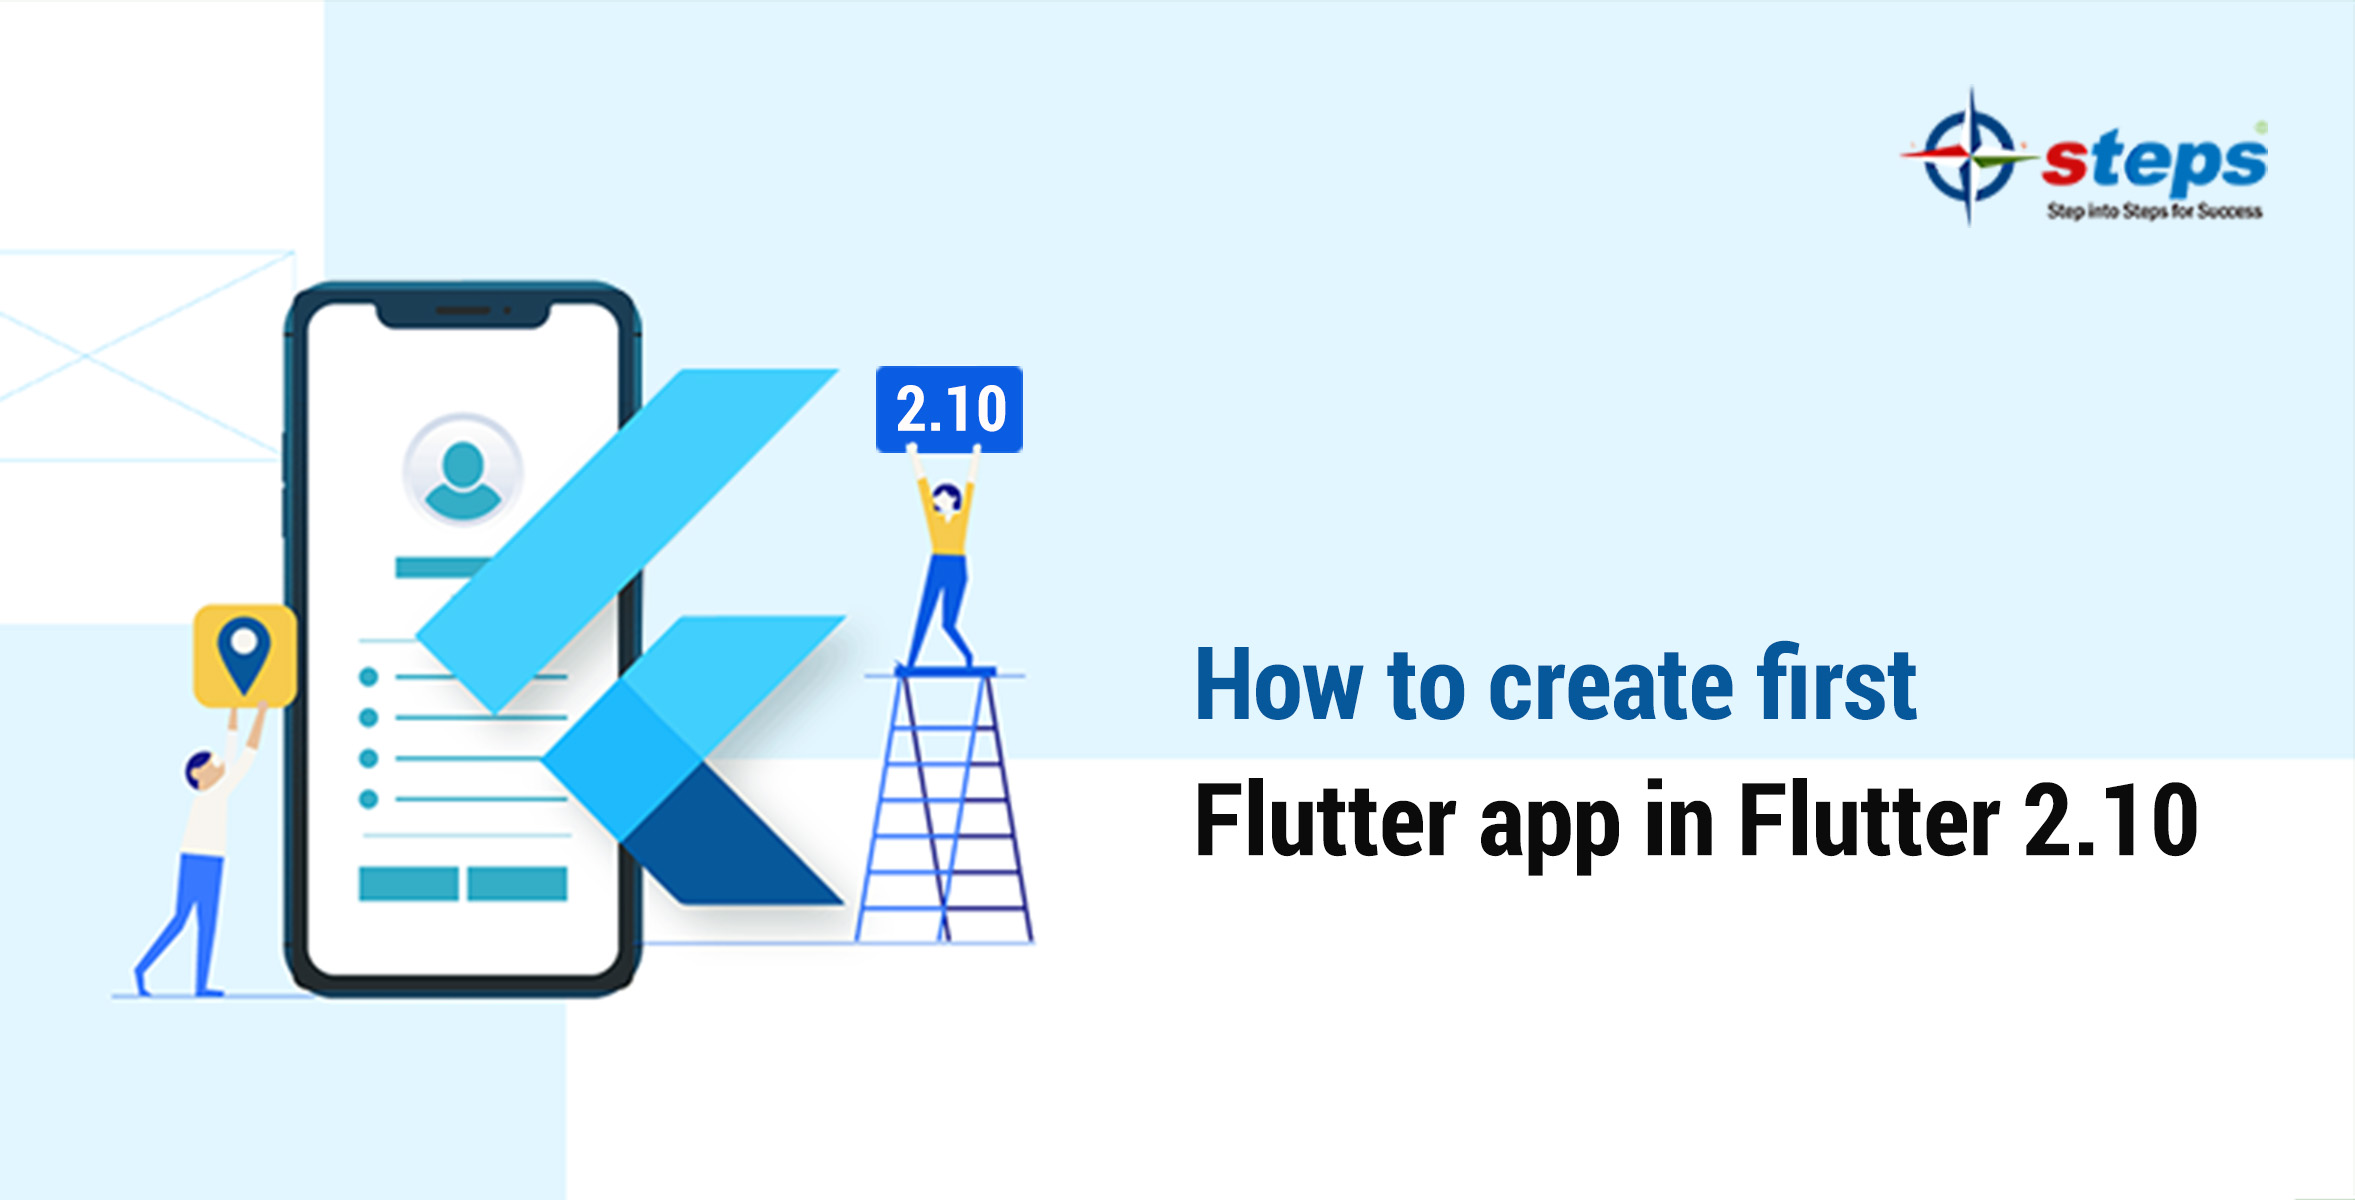 How to create first Flutter app in Flutter 2.10